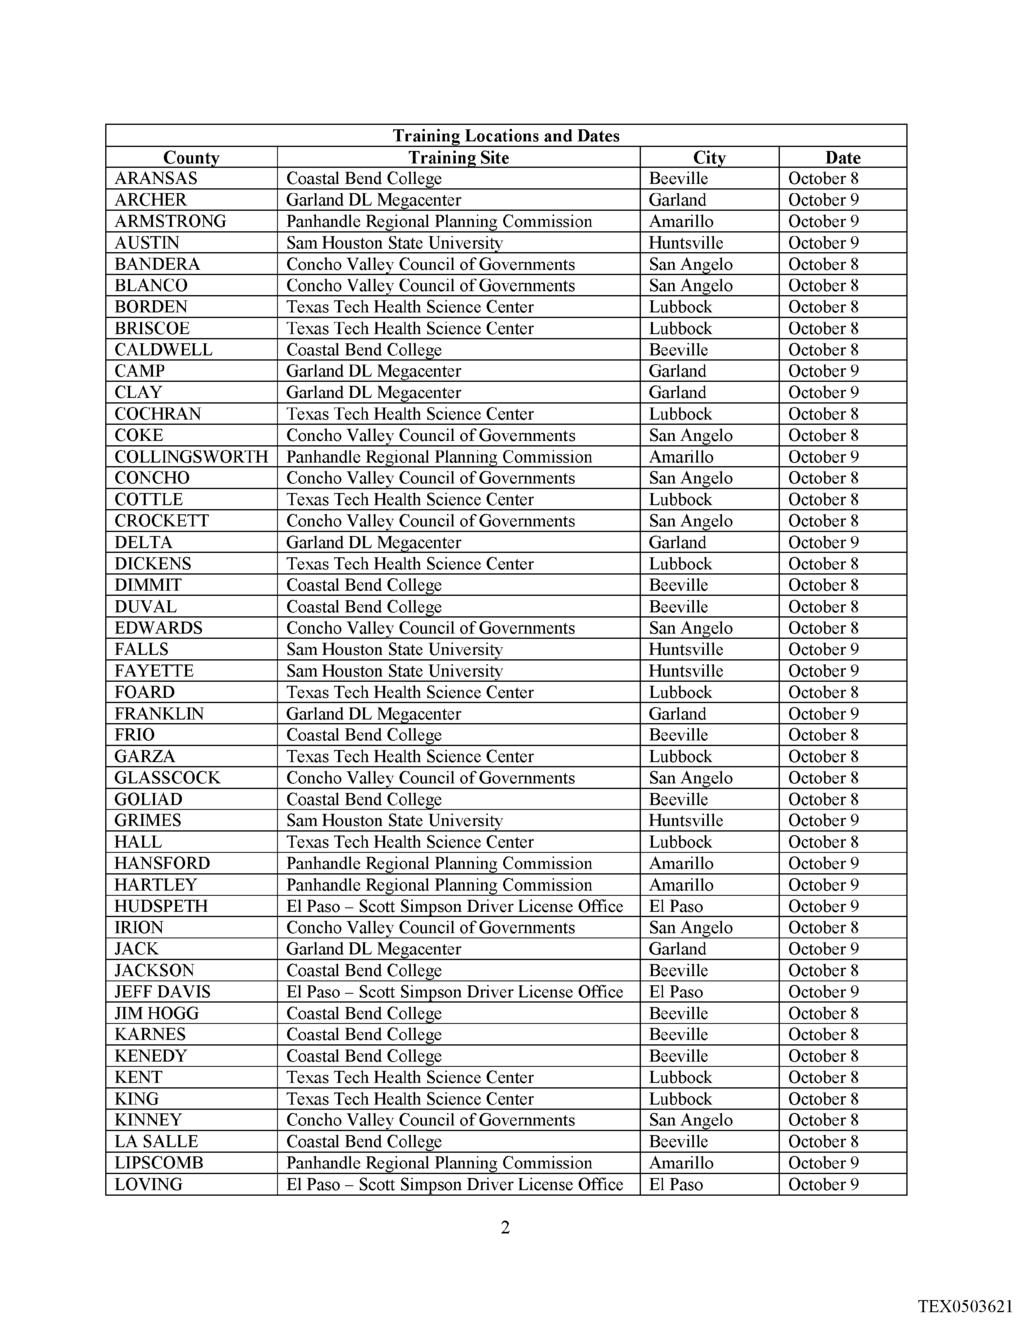 Case 2:13-cv-00193 Document 773-23 Filed TXSD on 11/19/14 Page 2 of 5 Trag Locions and Des County Trag Site City De ARANSAS Coastal Bend College Beeville Ocber 8 ARCHER Garland DL Megacenter Garland